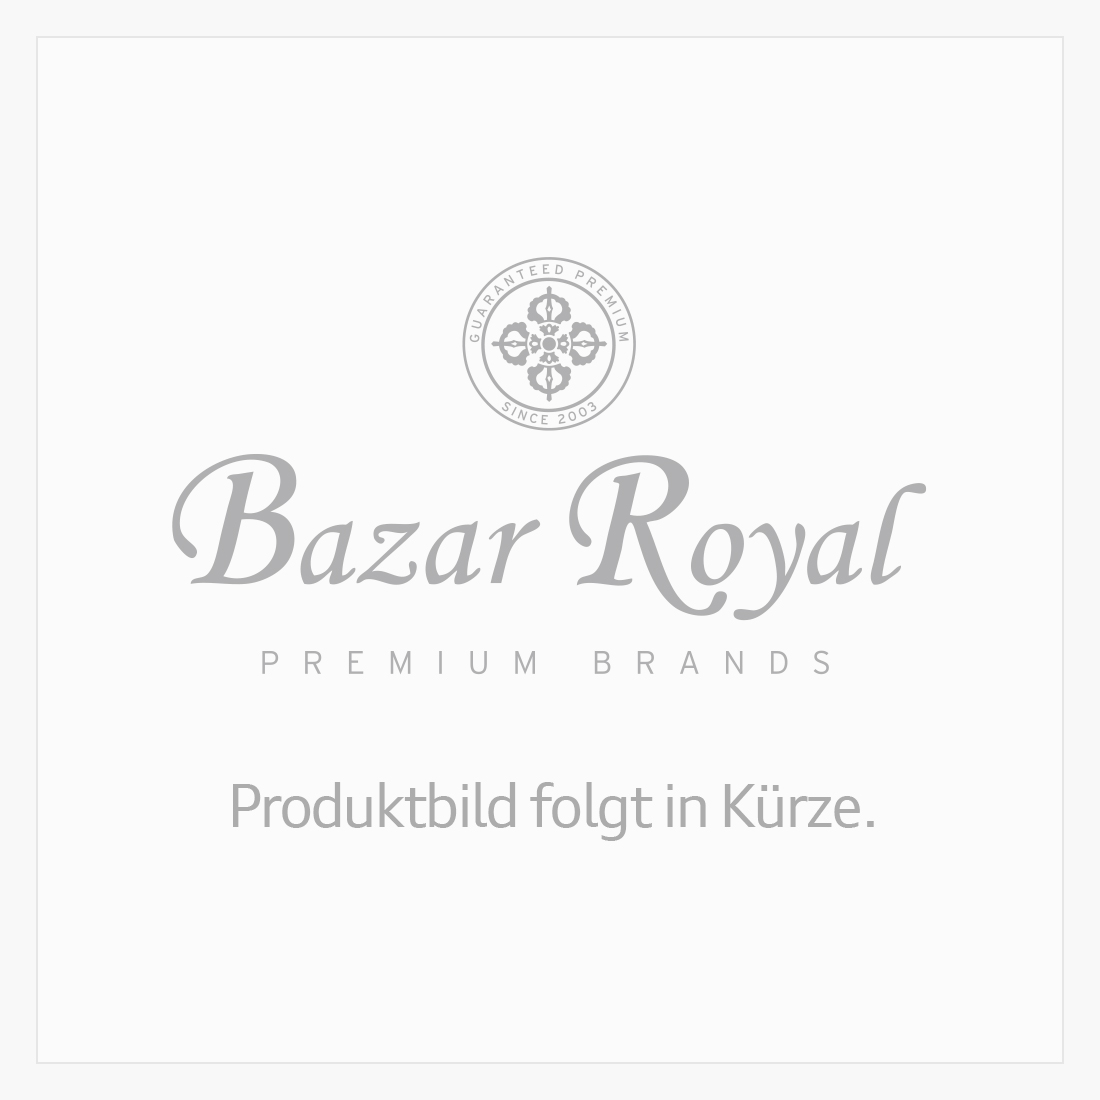 Bazar Royal